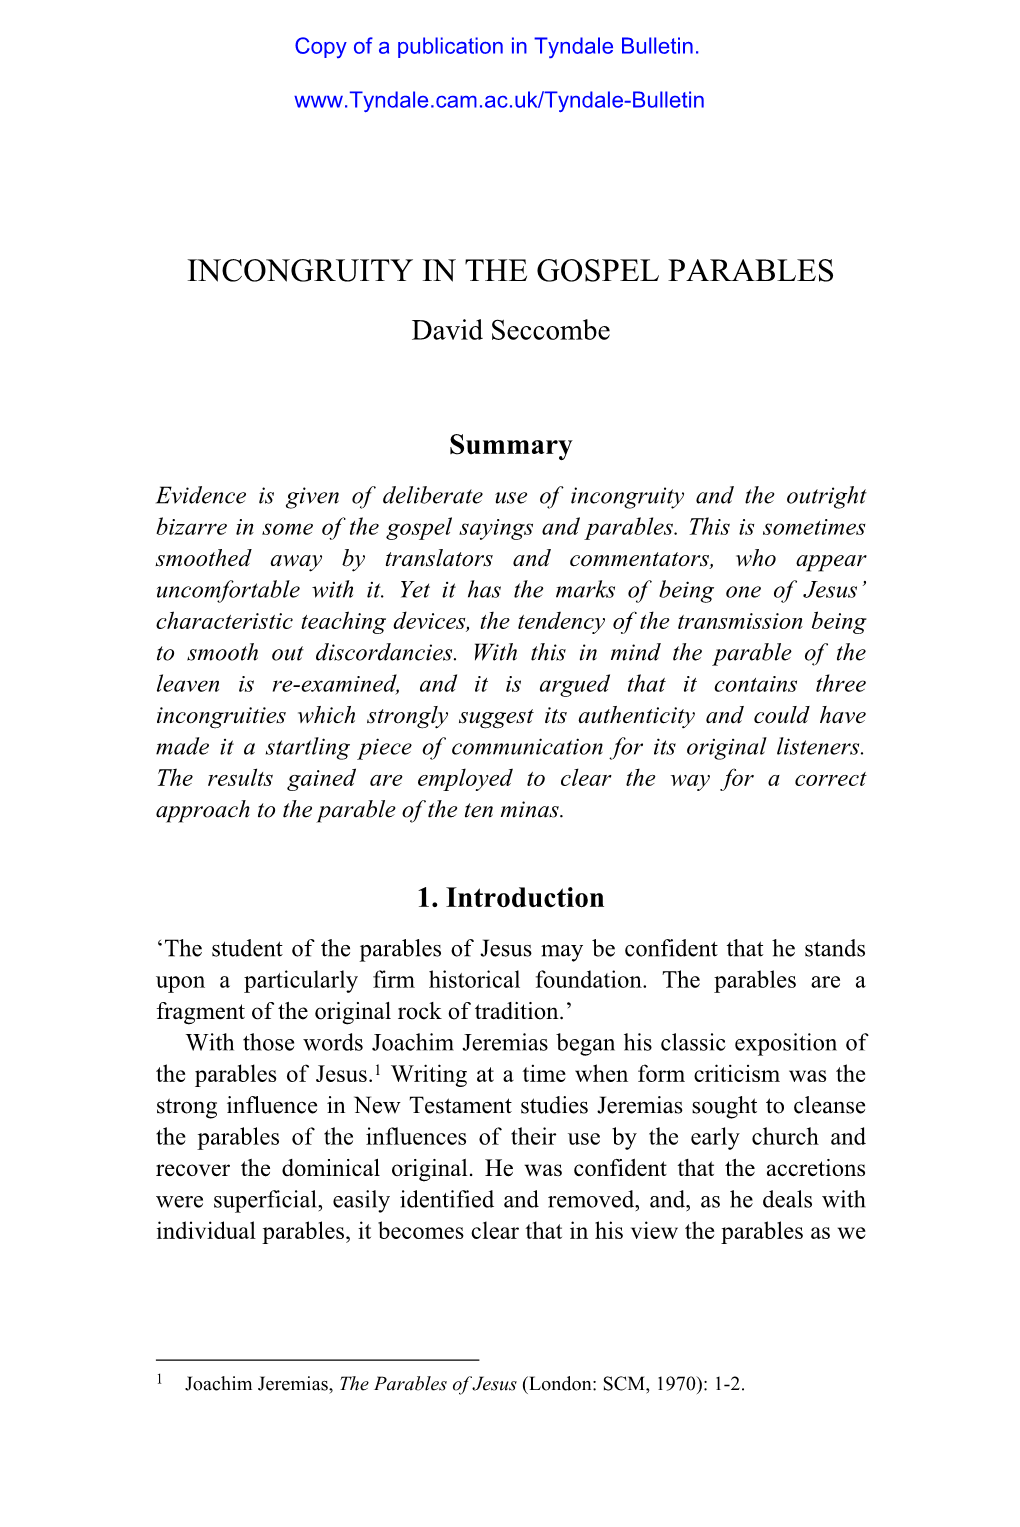 David Seccombe, "Incongruity in the Gospel Parables,"